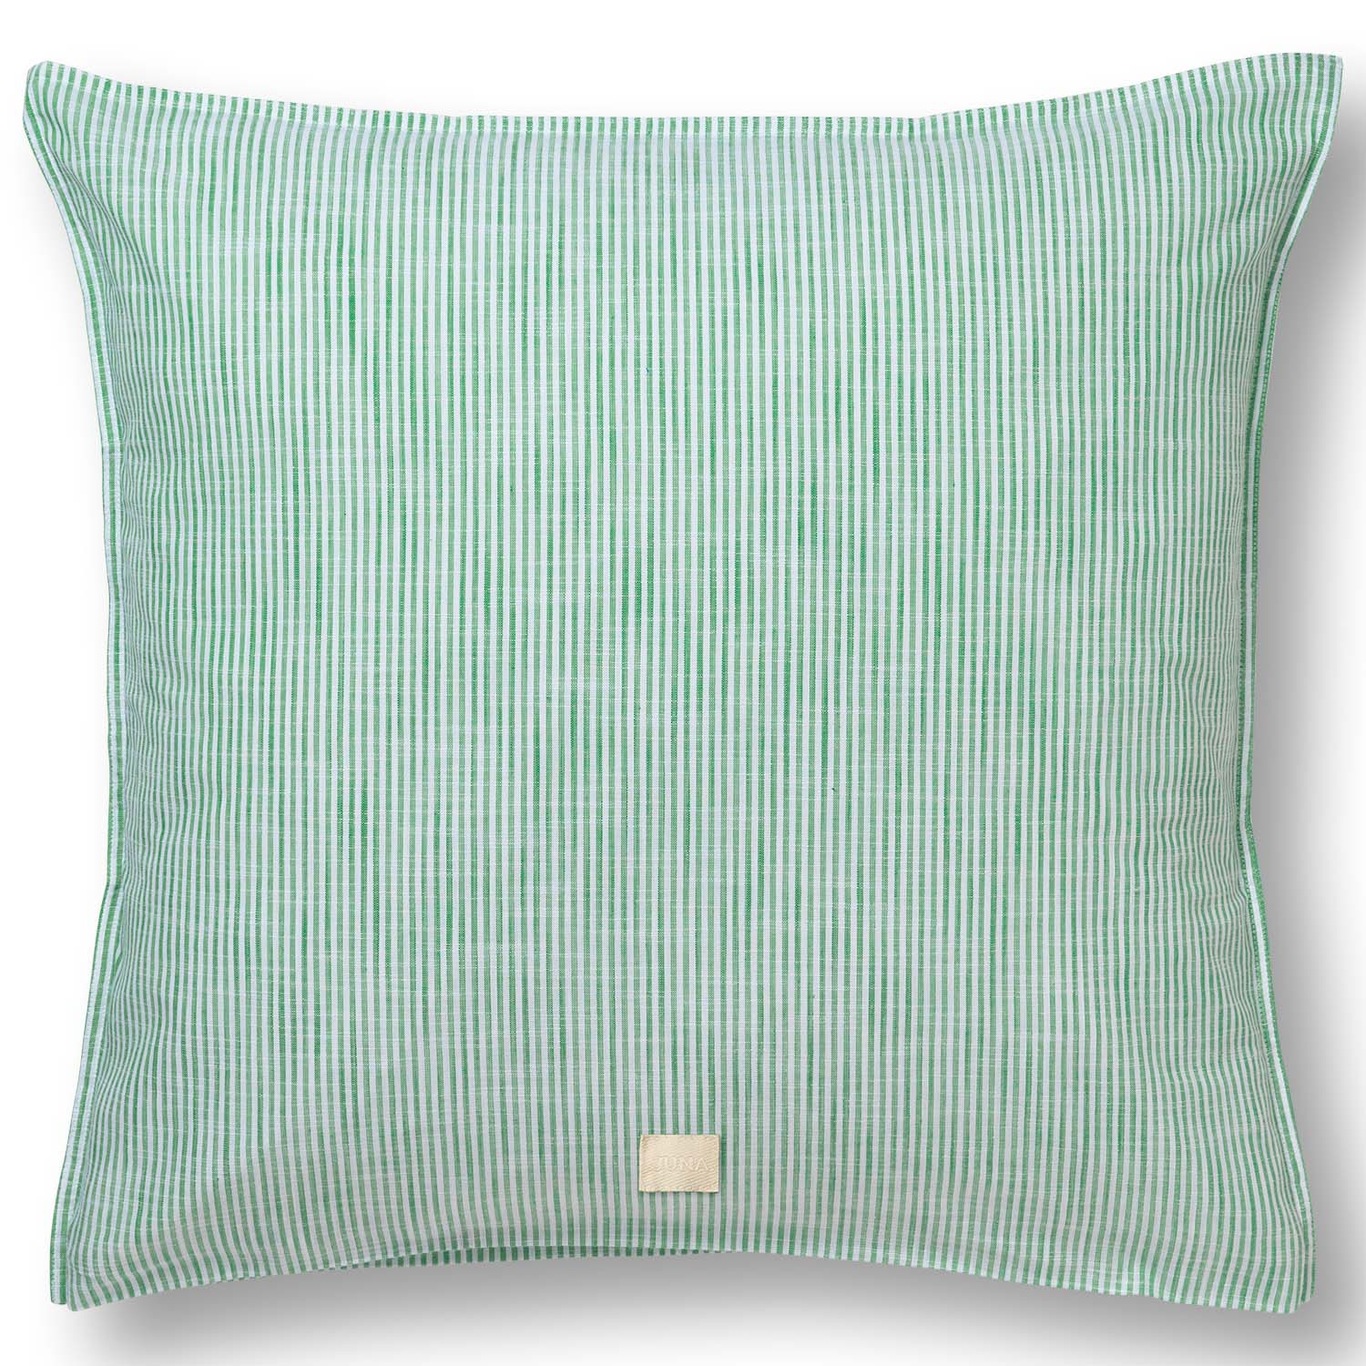 Monochrome Lines Pillowcase 60x63 cm, Green